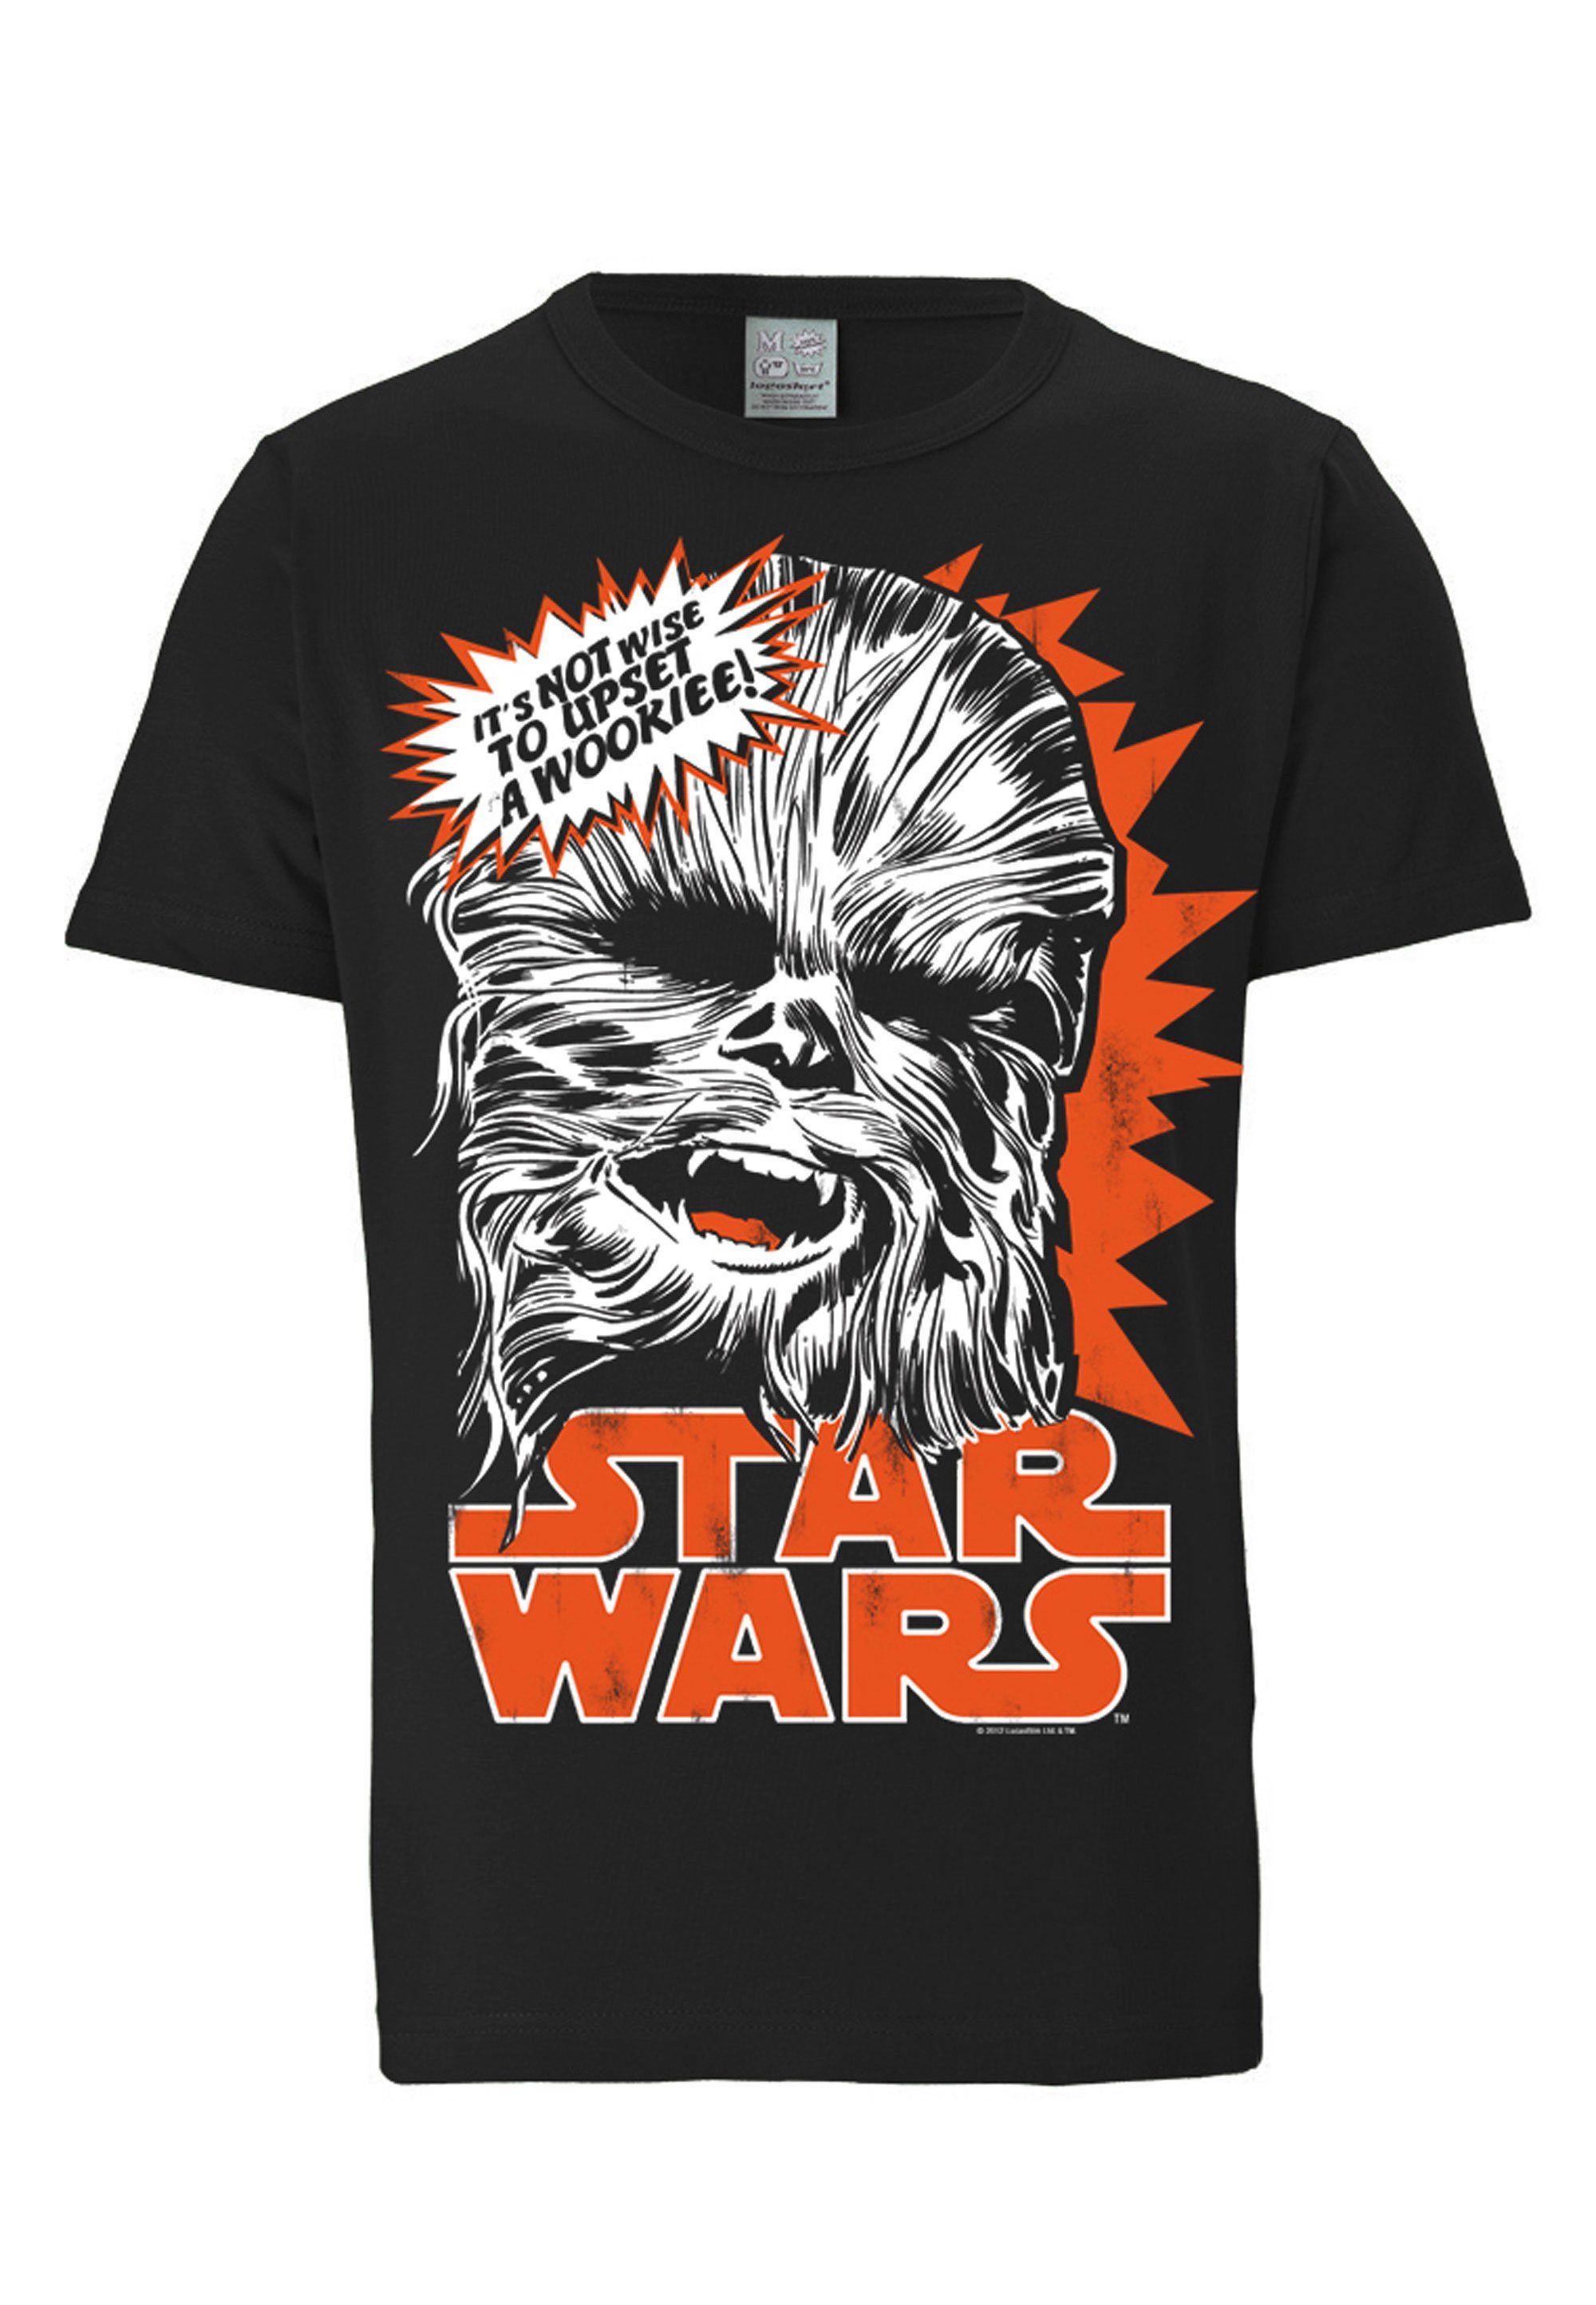 LOGOSHIRT Print Chewbacca Wars mit - T-Shirt lizenziertem Star